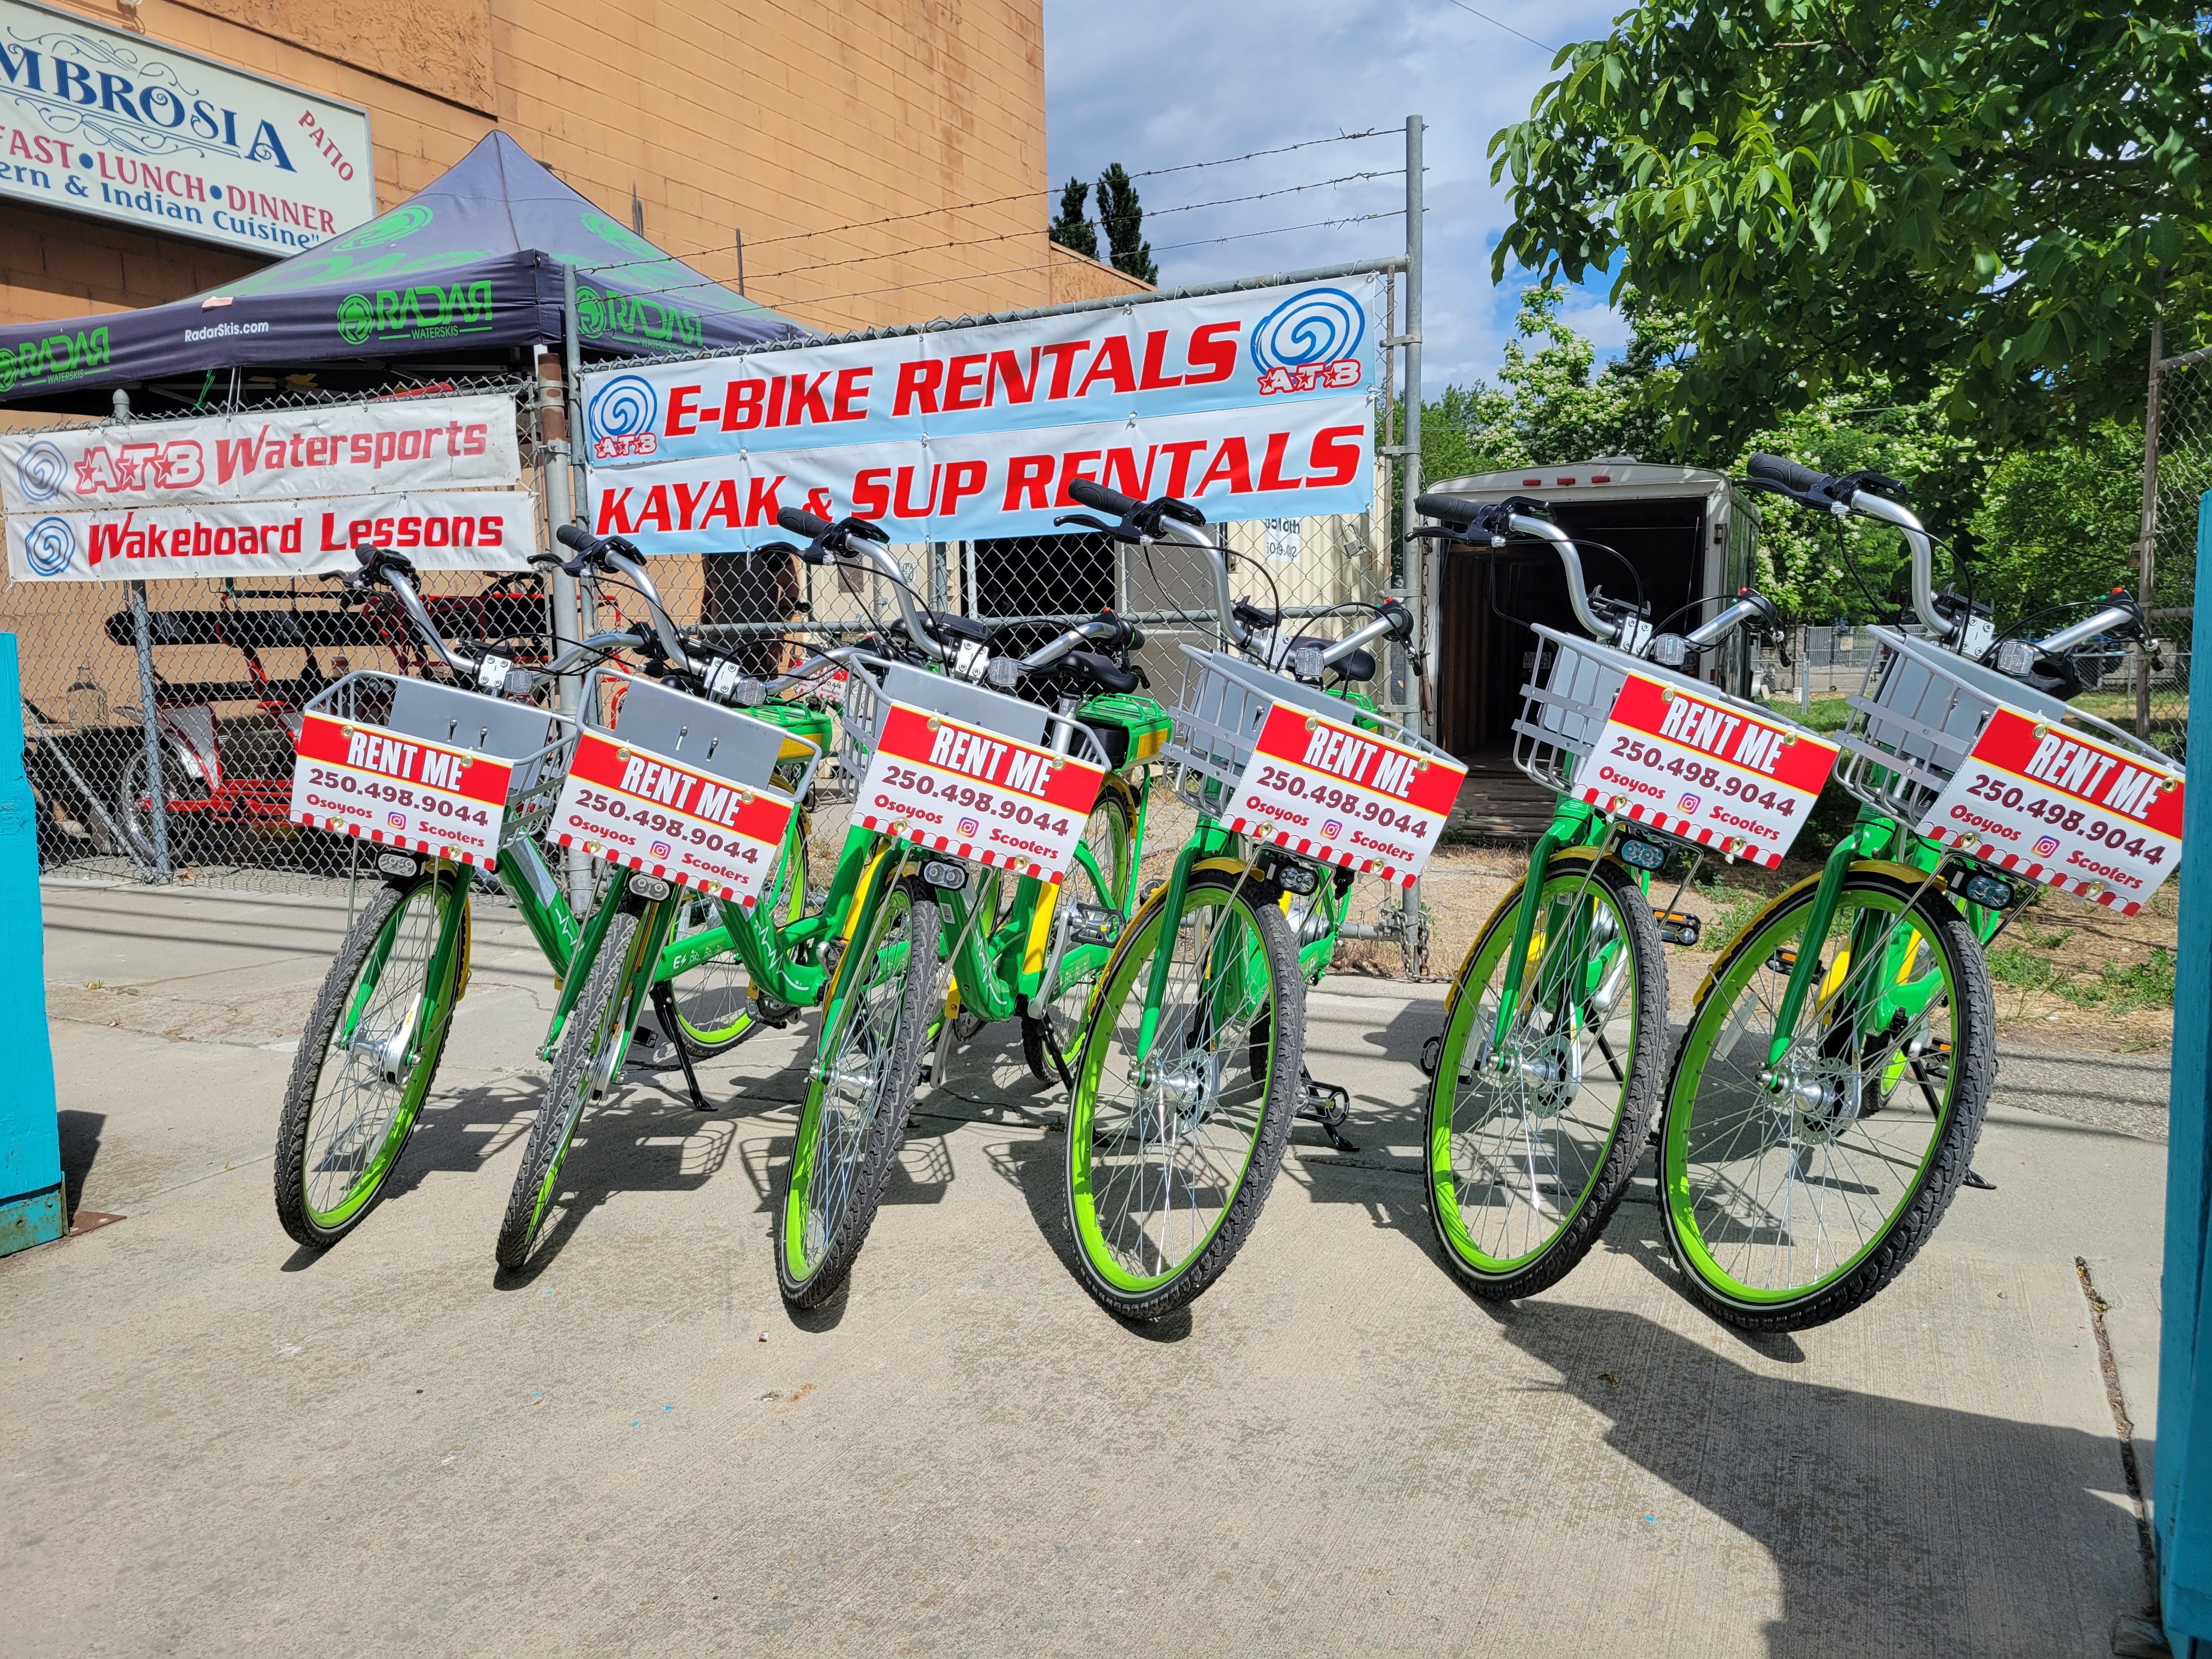 electric bikes, bicycles, bike rentals, e-bike, rentals, Osoyoos British Columbia, Canada